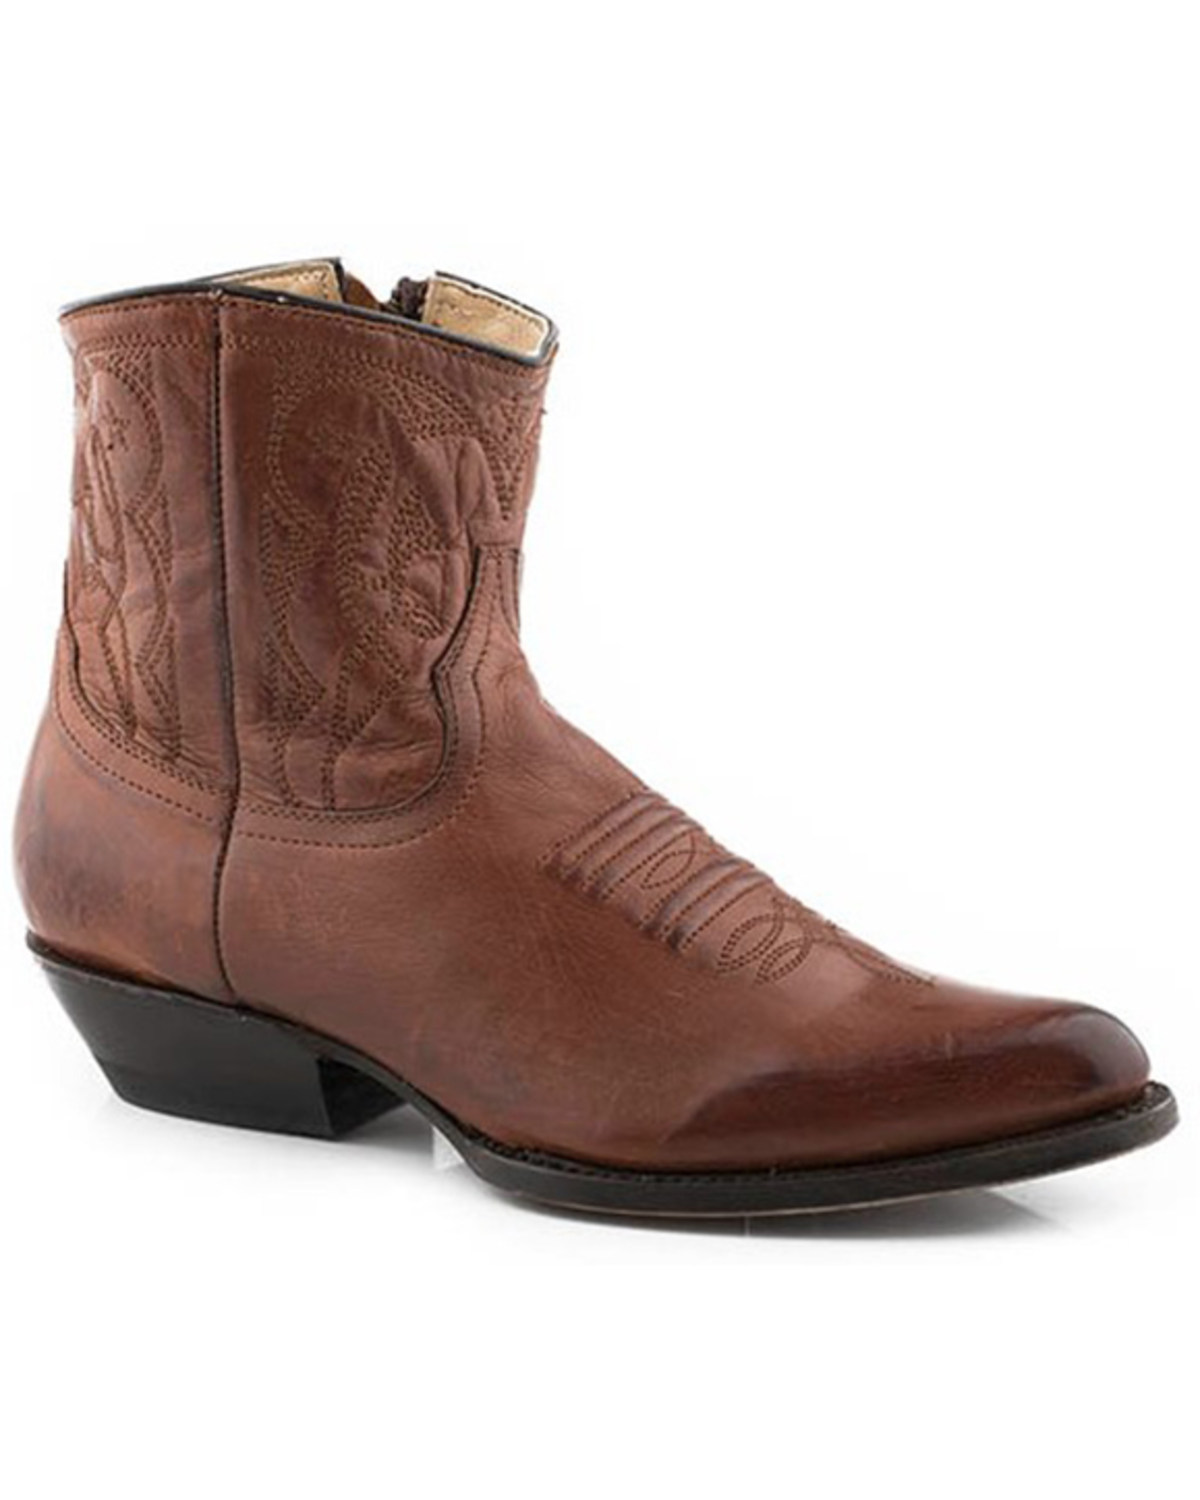 Stetson Women's Annika Cognac Western Boots - Pointed Toe